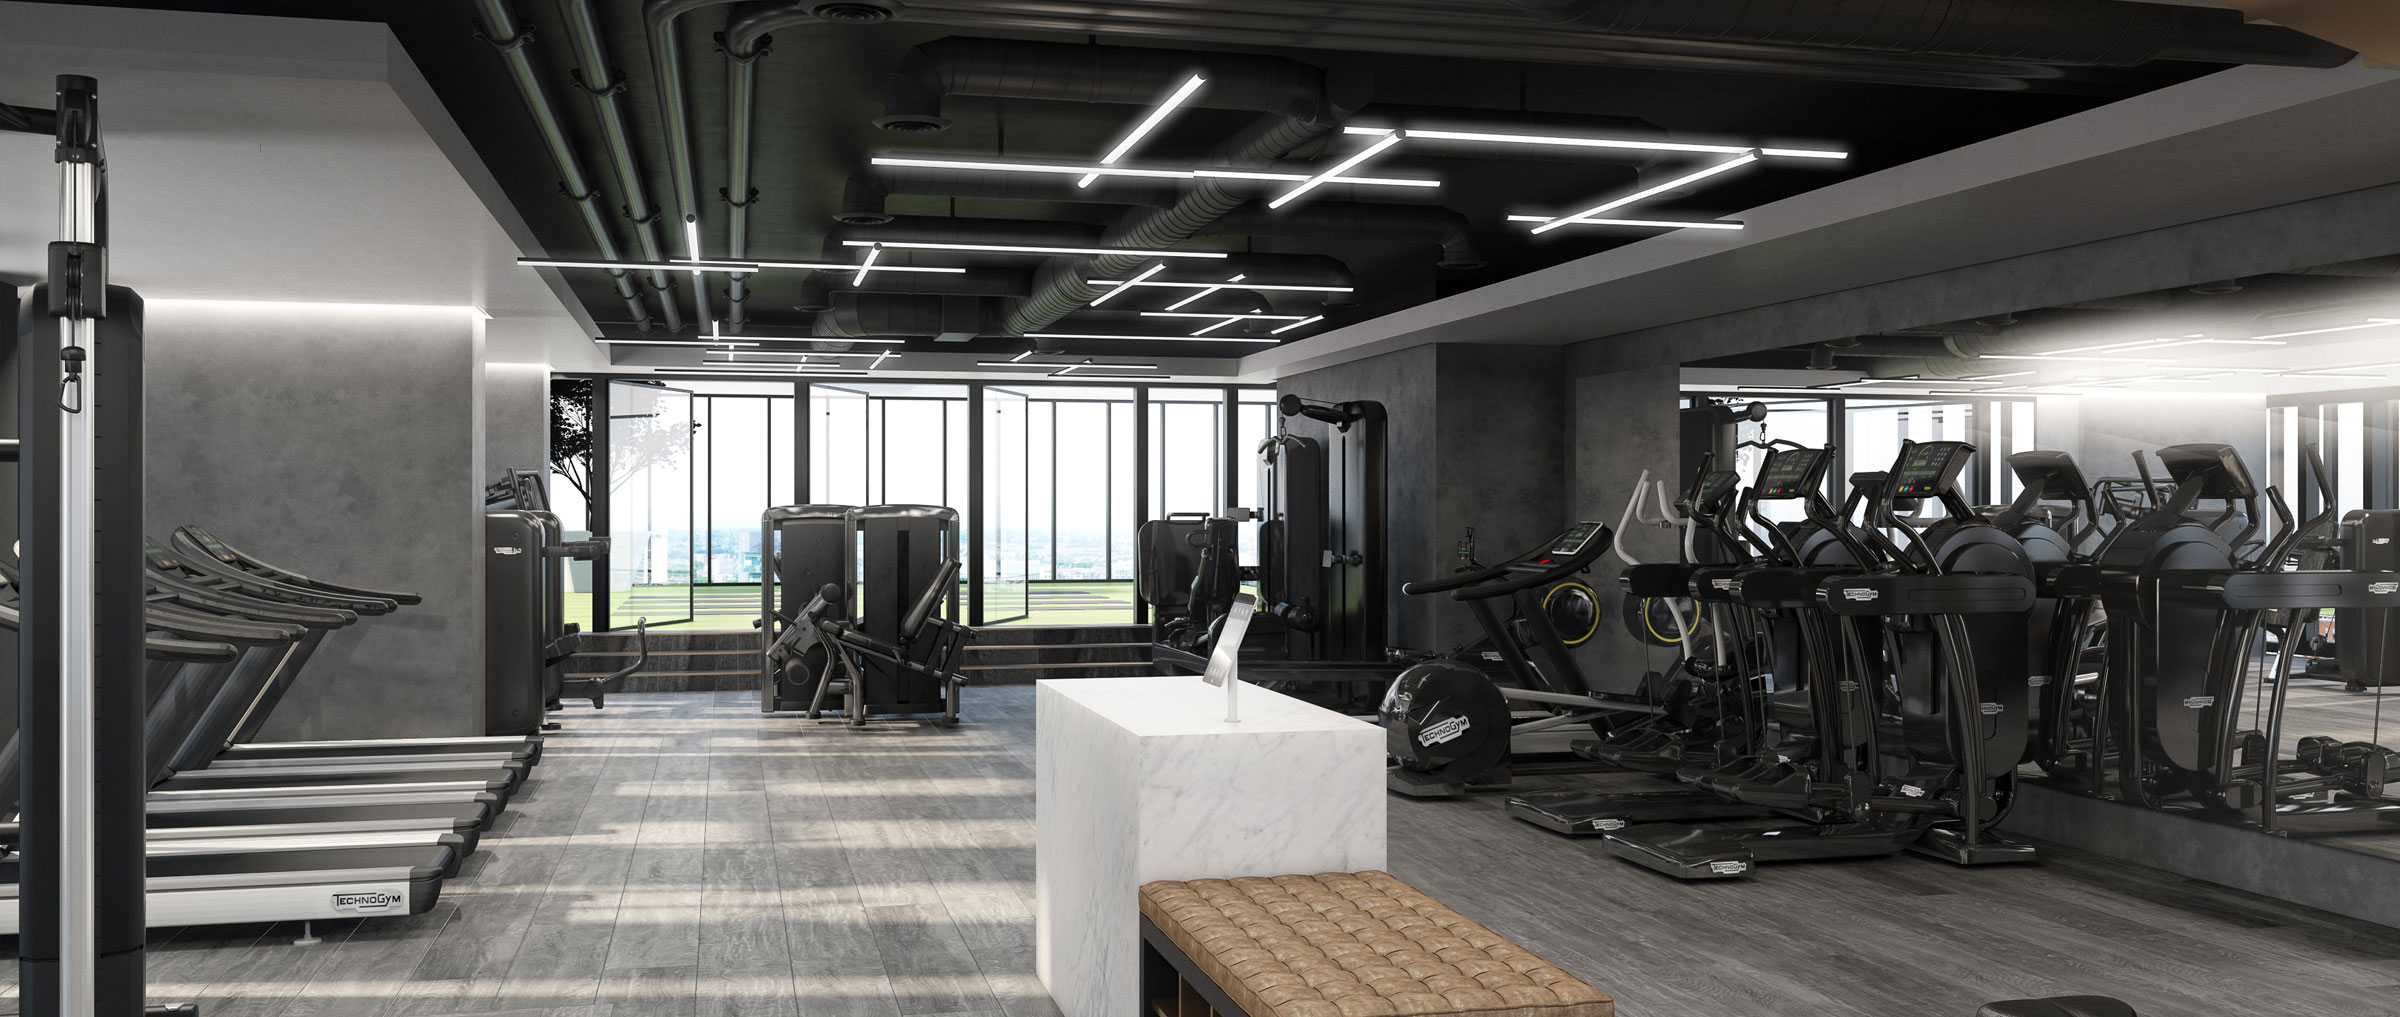 Renaker residential gym interior design